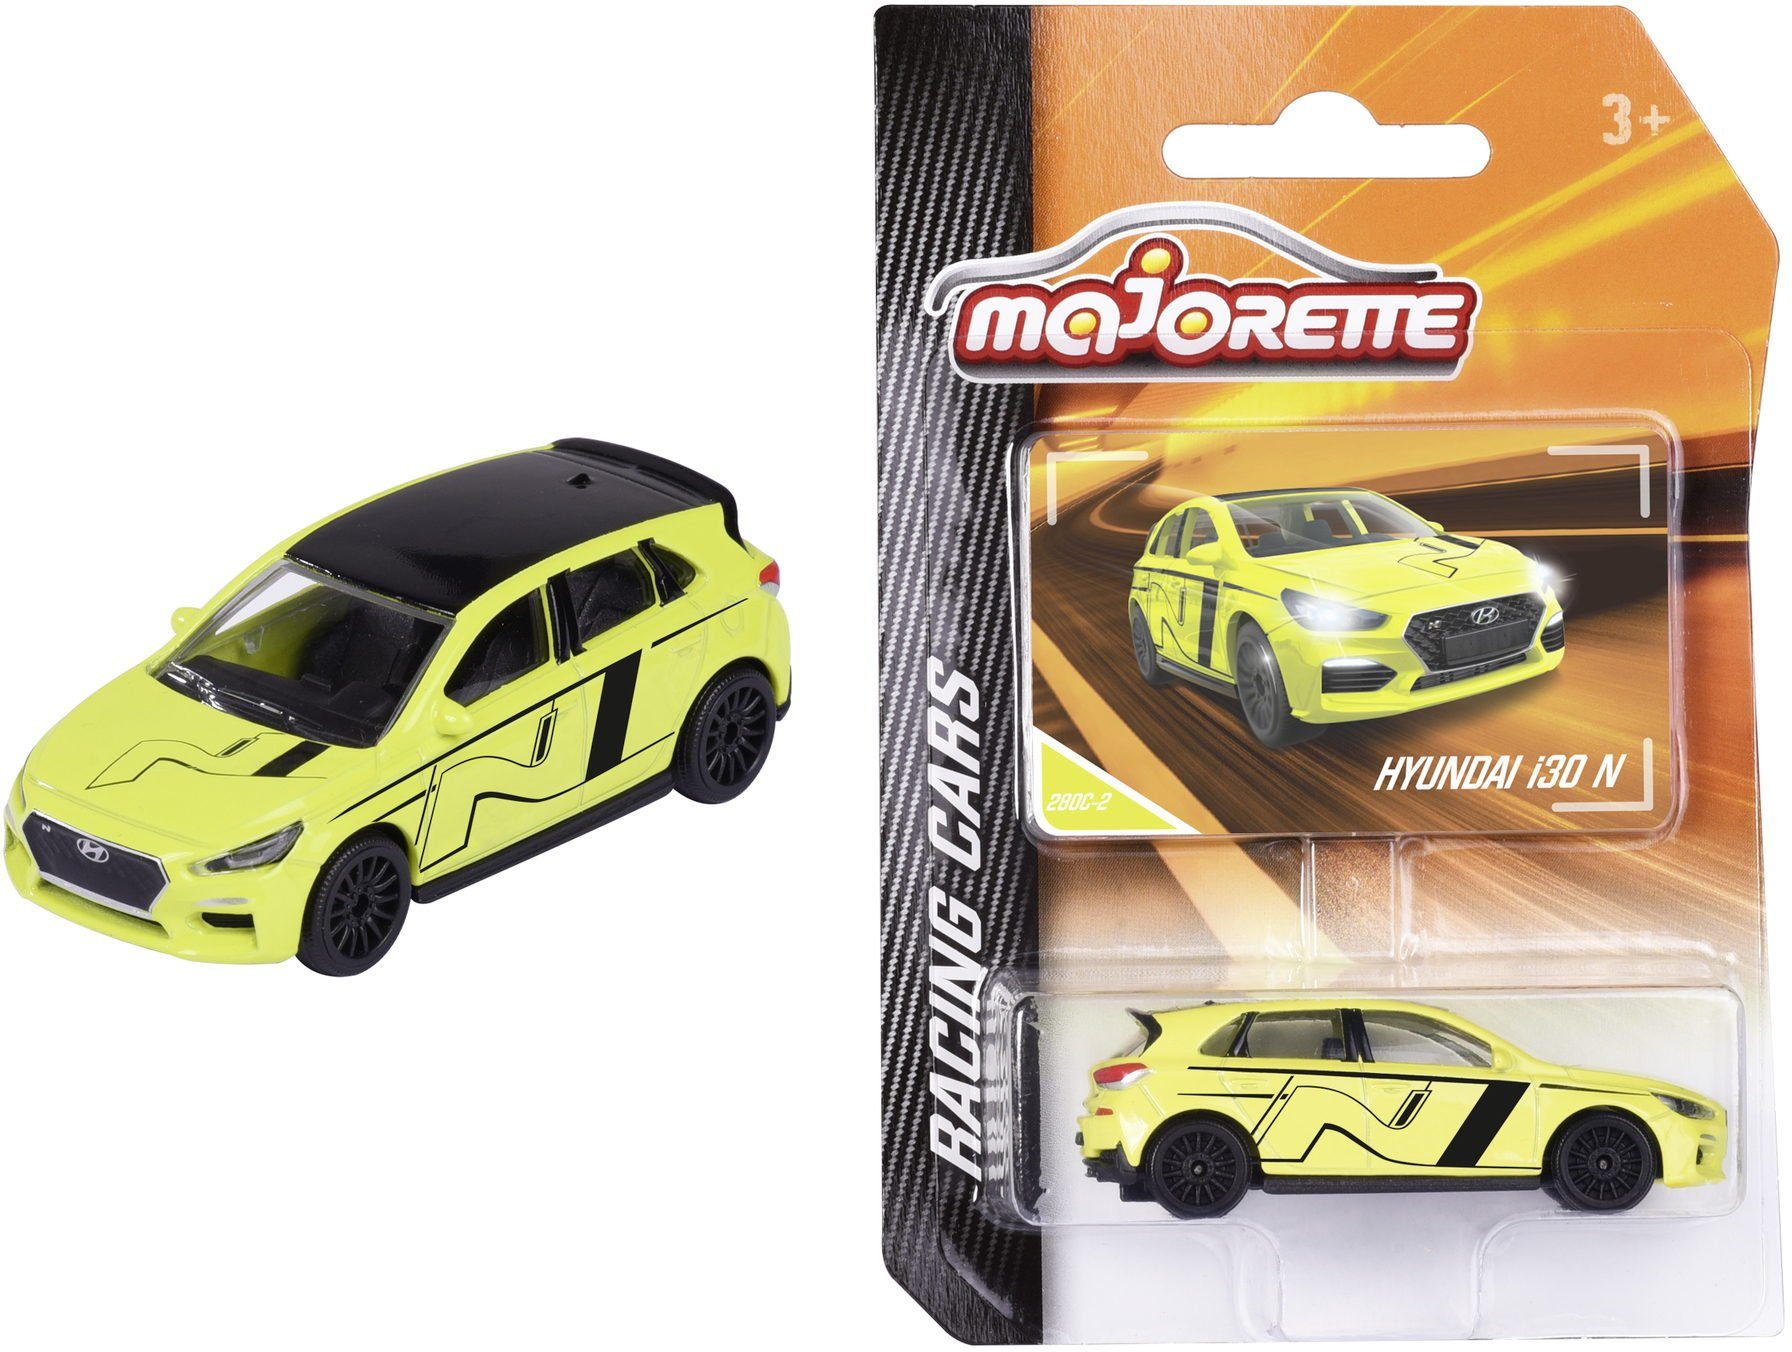 majORETTE Spielzeug-Auto Spielzeugauto i30N 212084009Q32 gelb Hyundai Racing Cars